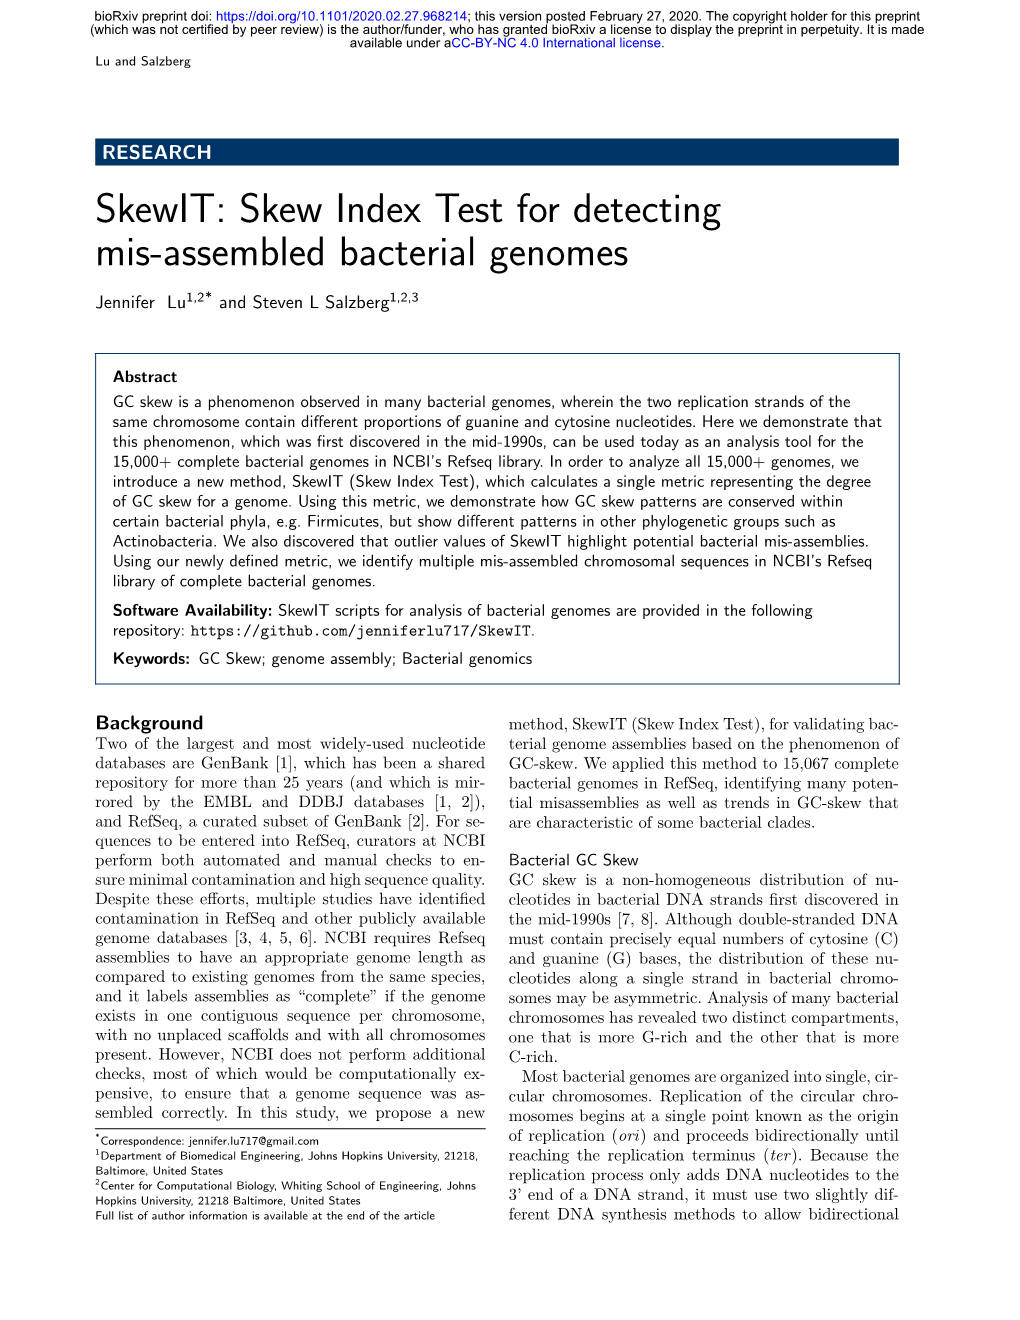 Skewit: Skew Index Test for Detecting Mis-Assembled Bacterial Genomes